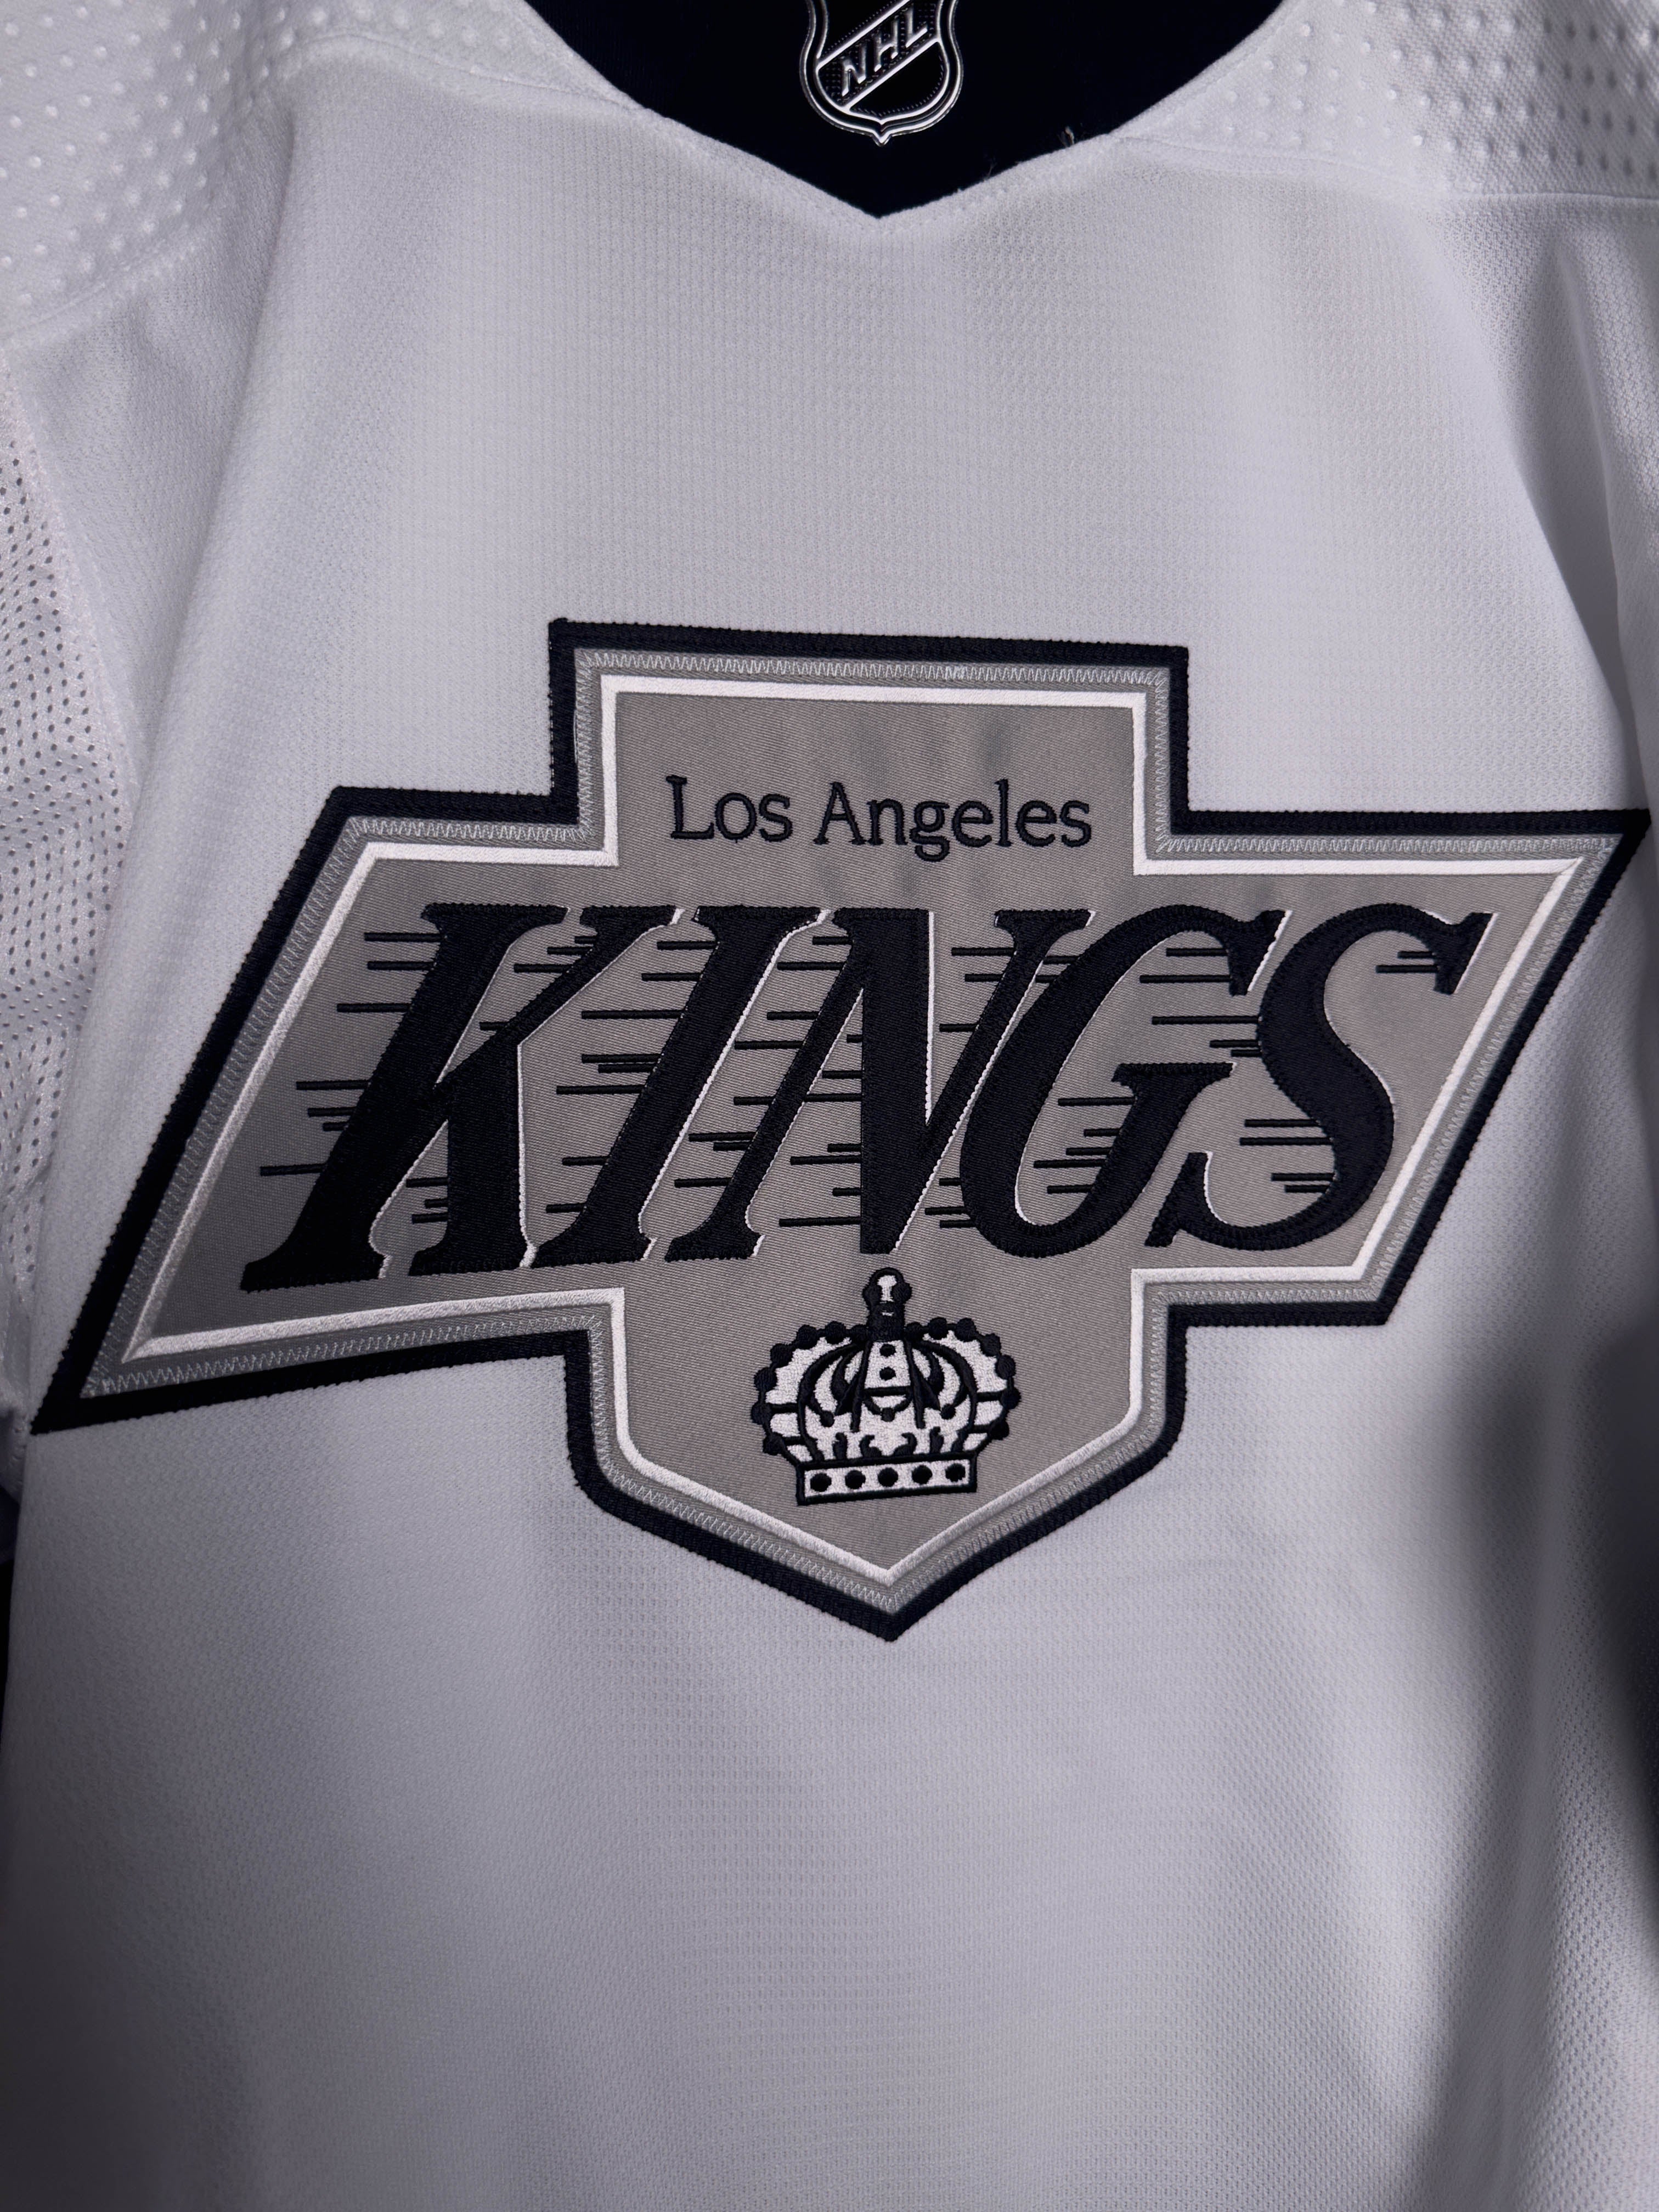 Nhl Shop Los Angeles Kings Alternate Logo Shirt